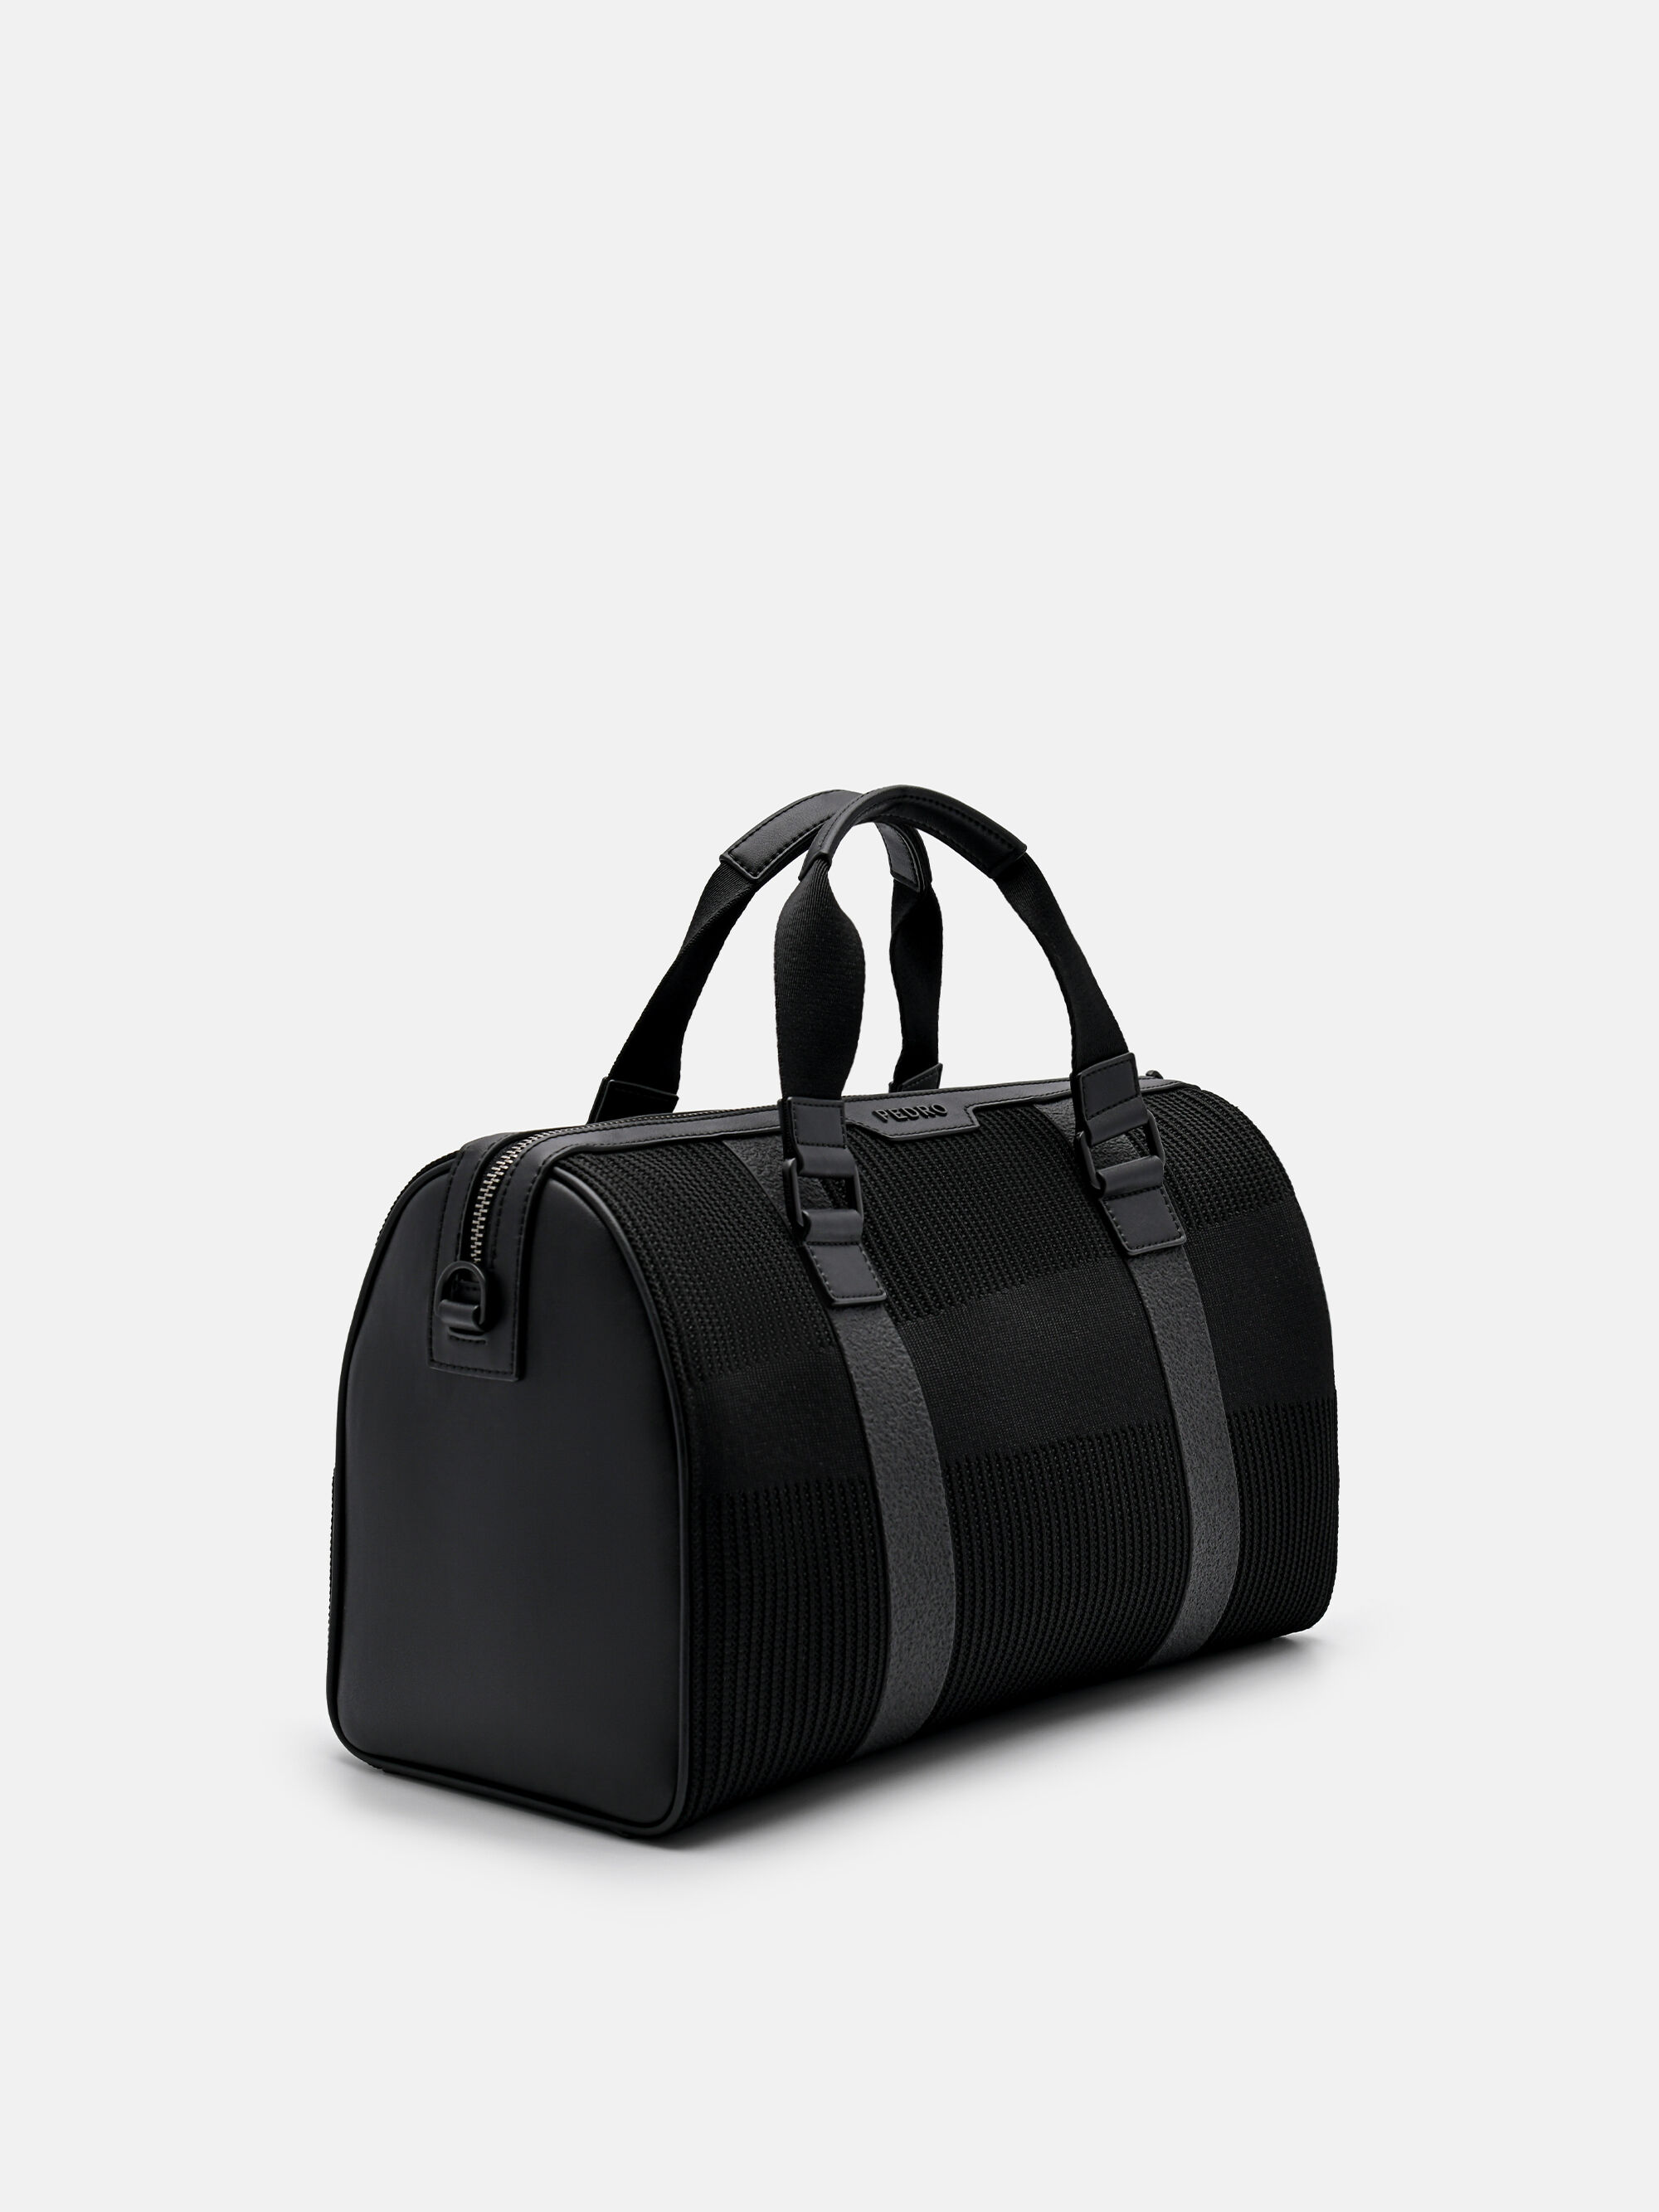 Tristan Fabric Duffel Bag, Black